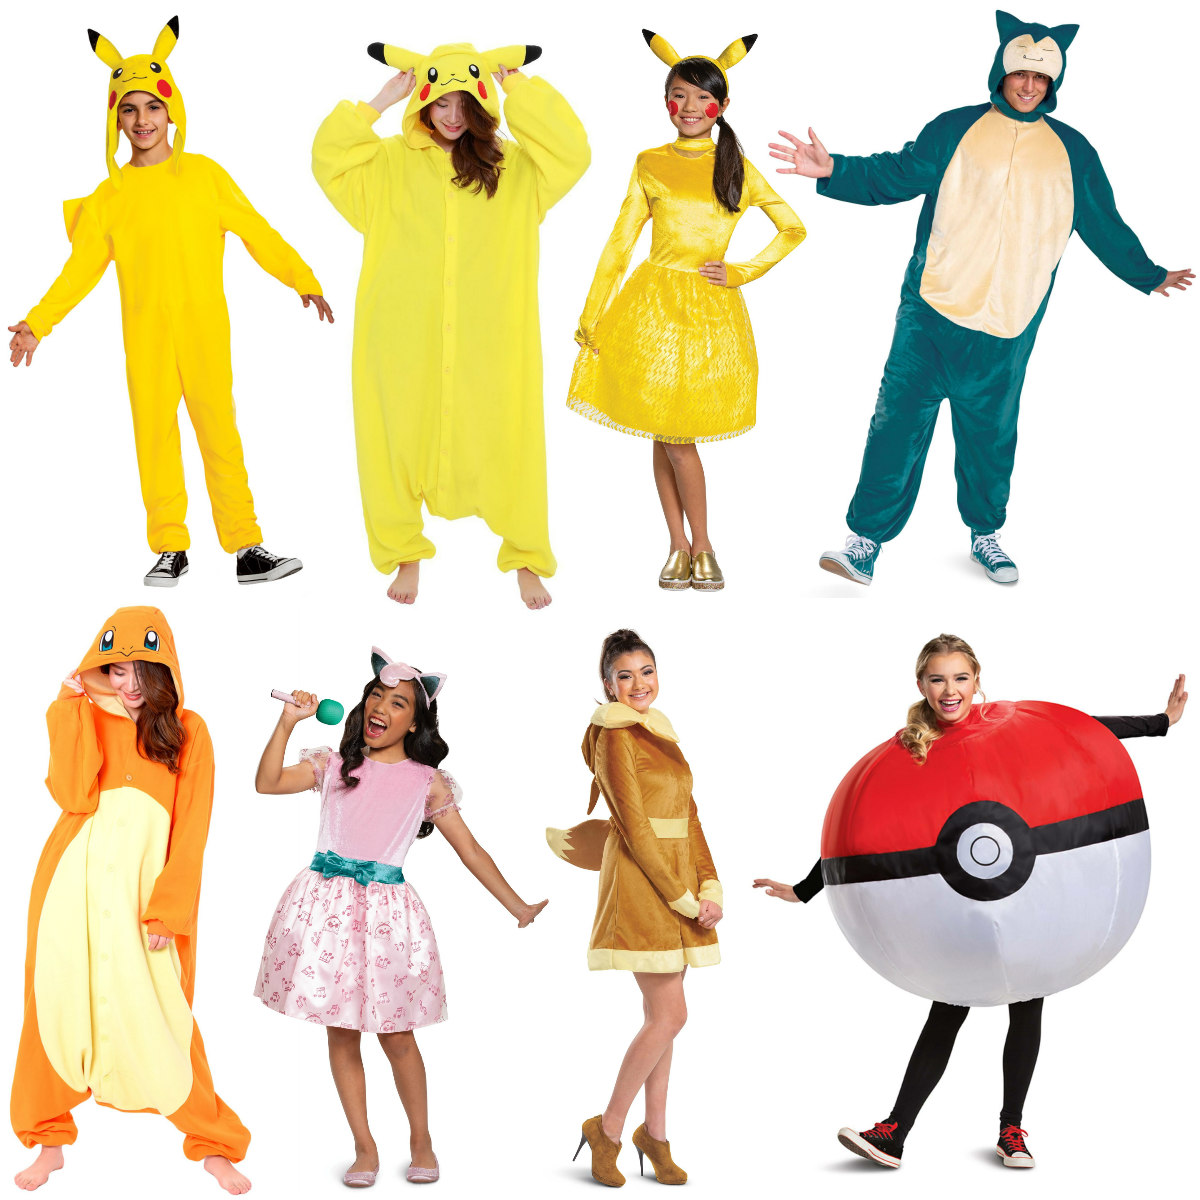 Cartoon character costumes